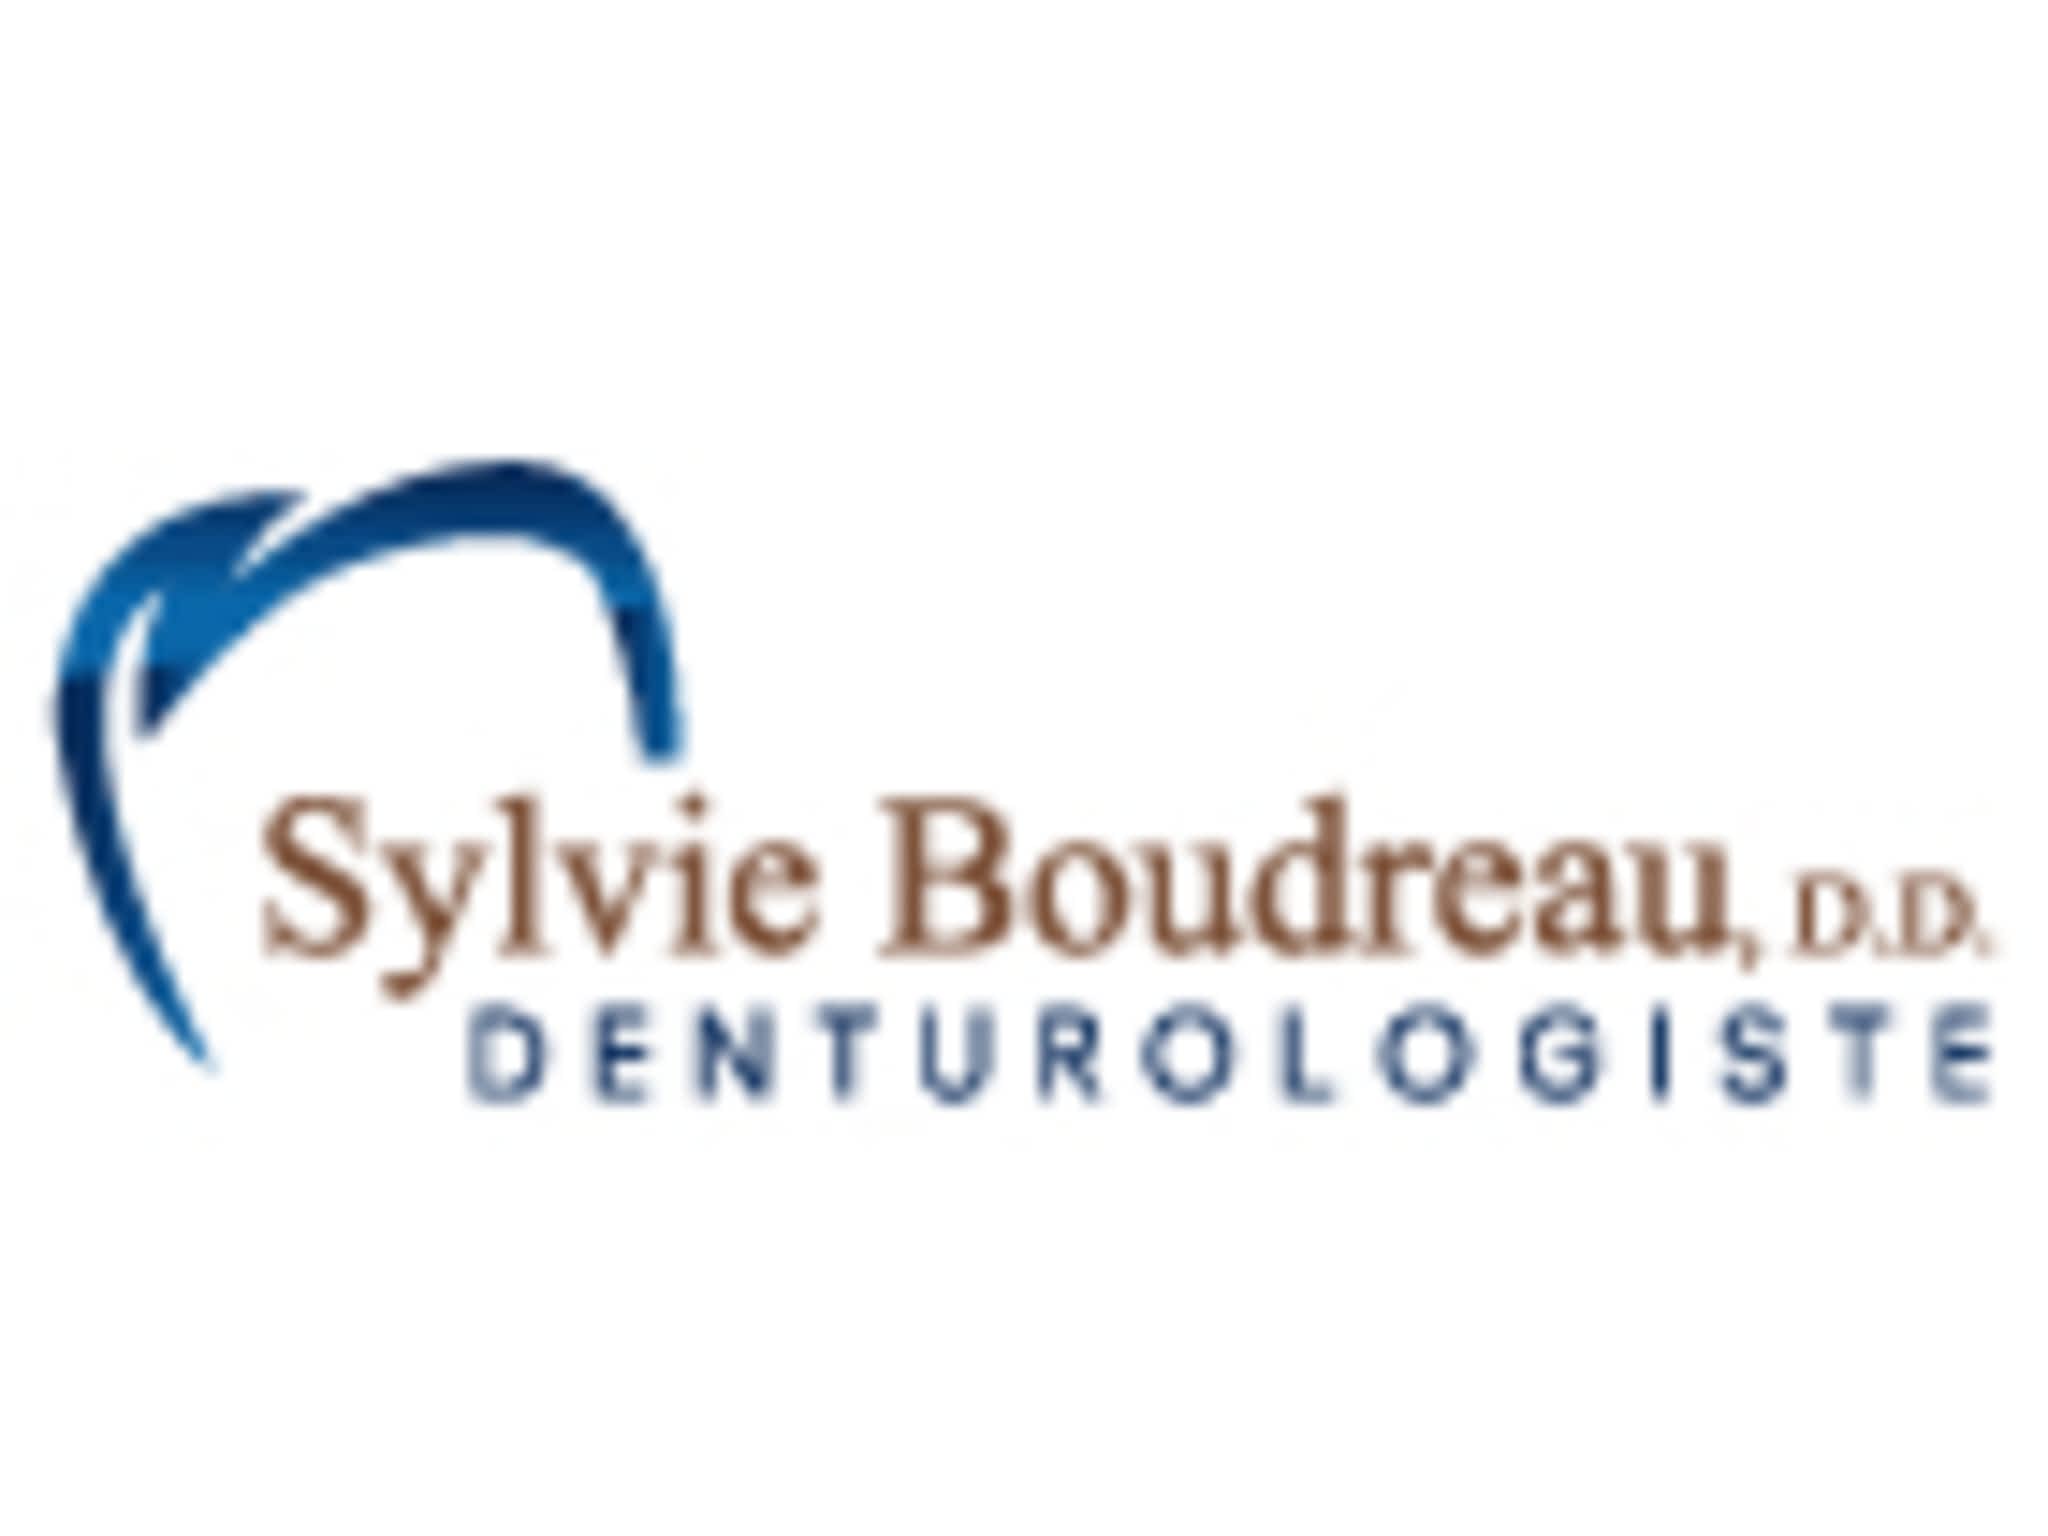 photo Clinique de Denturologie Sylvie Boudreau